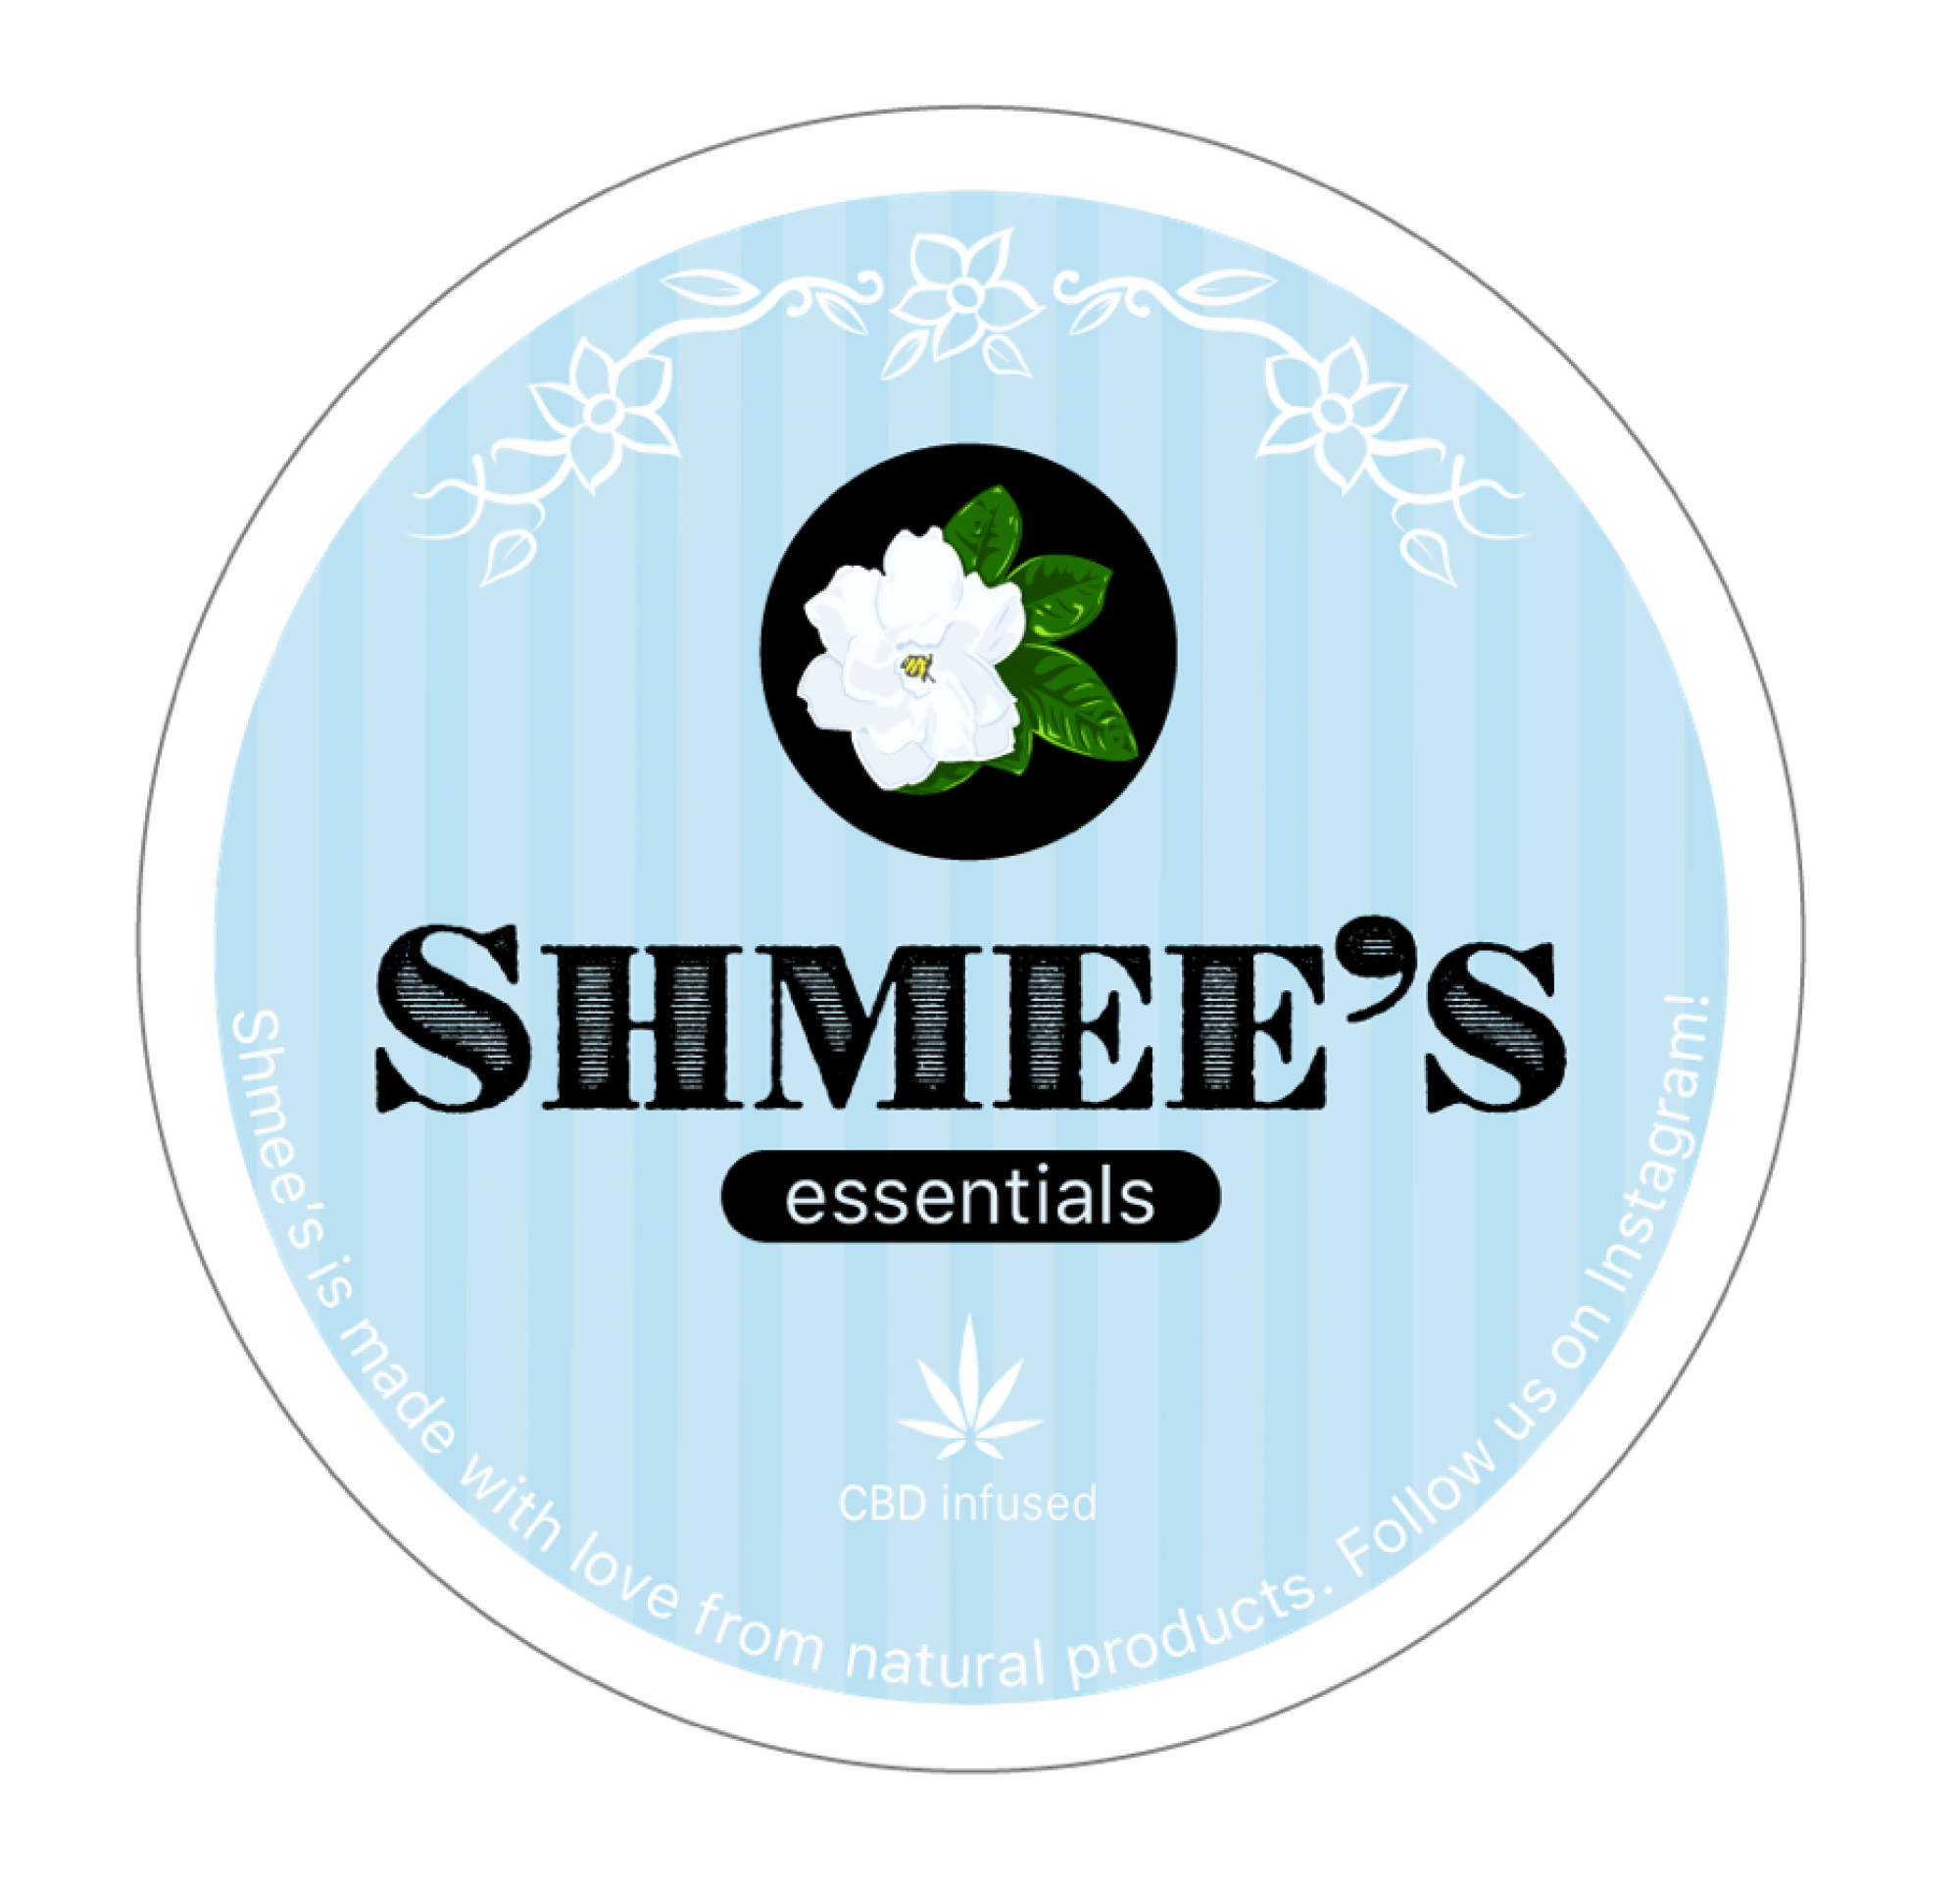 Shmee's Essentials